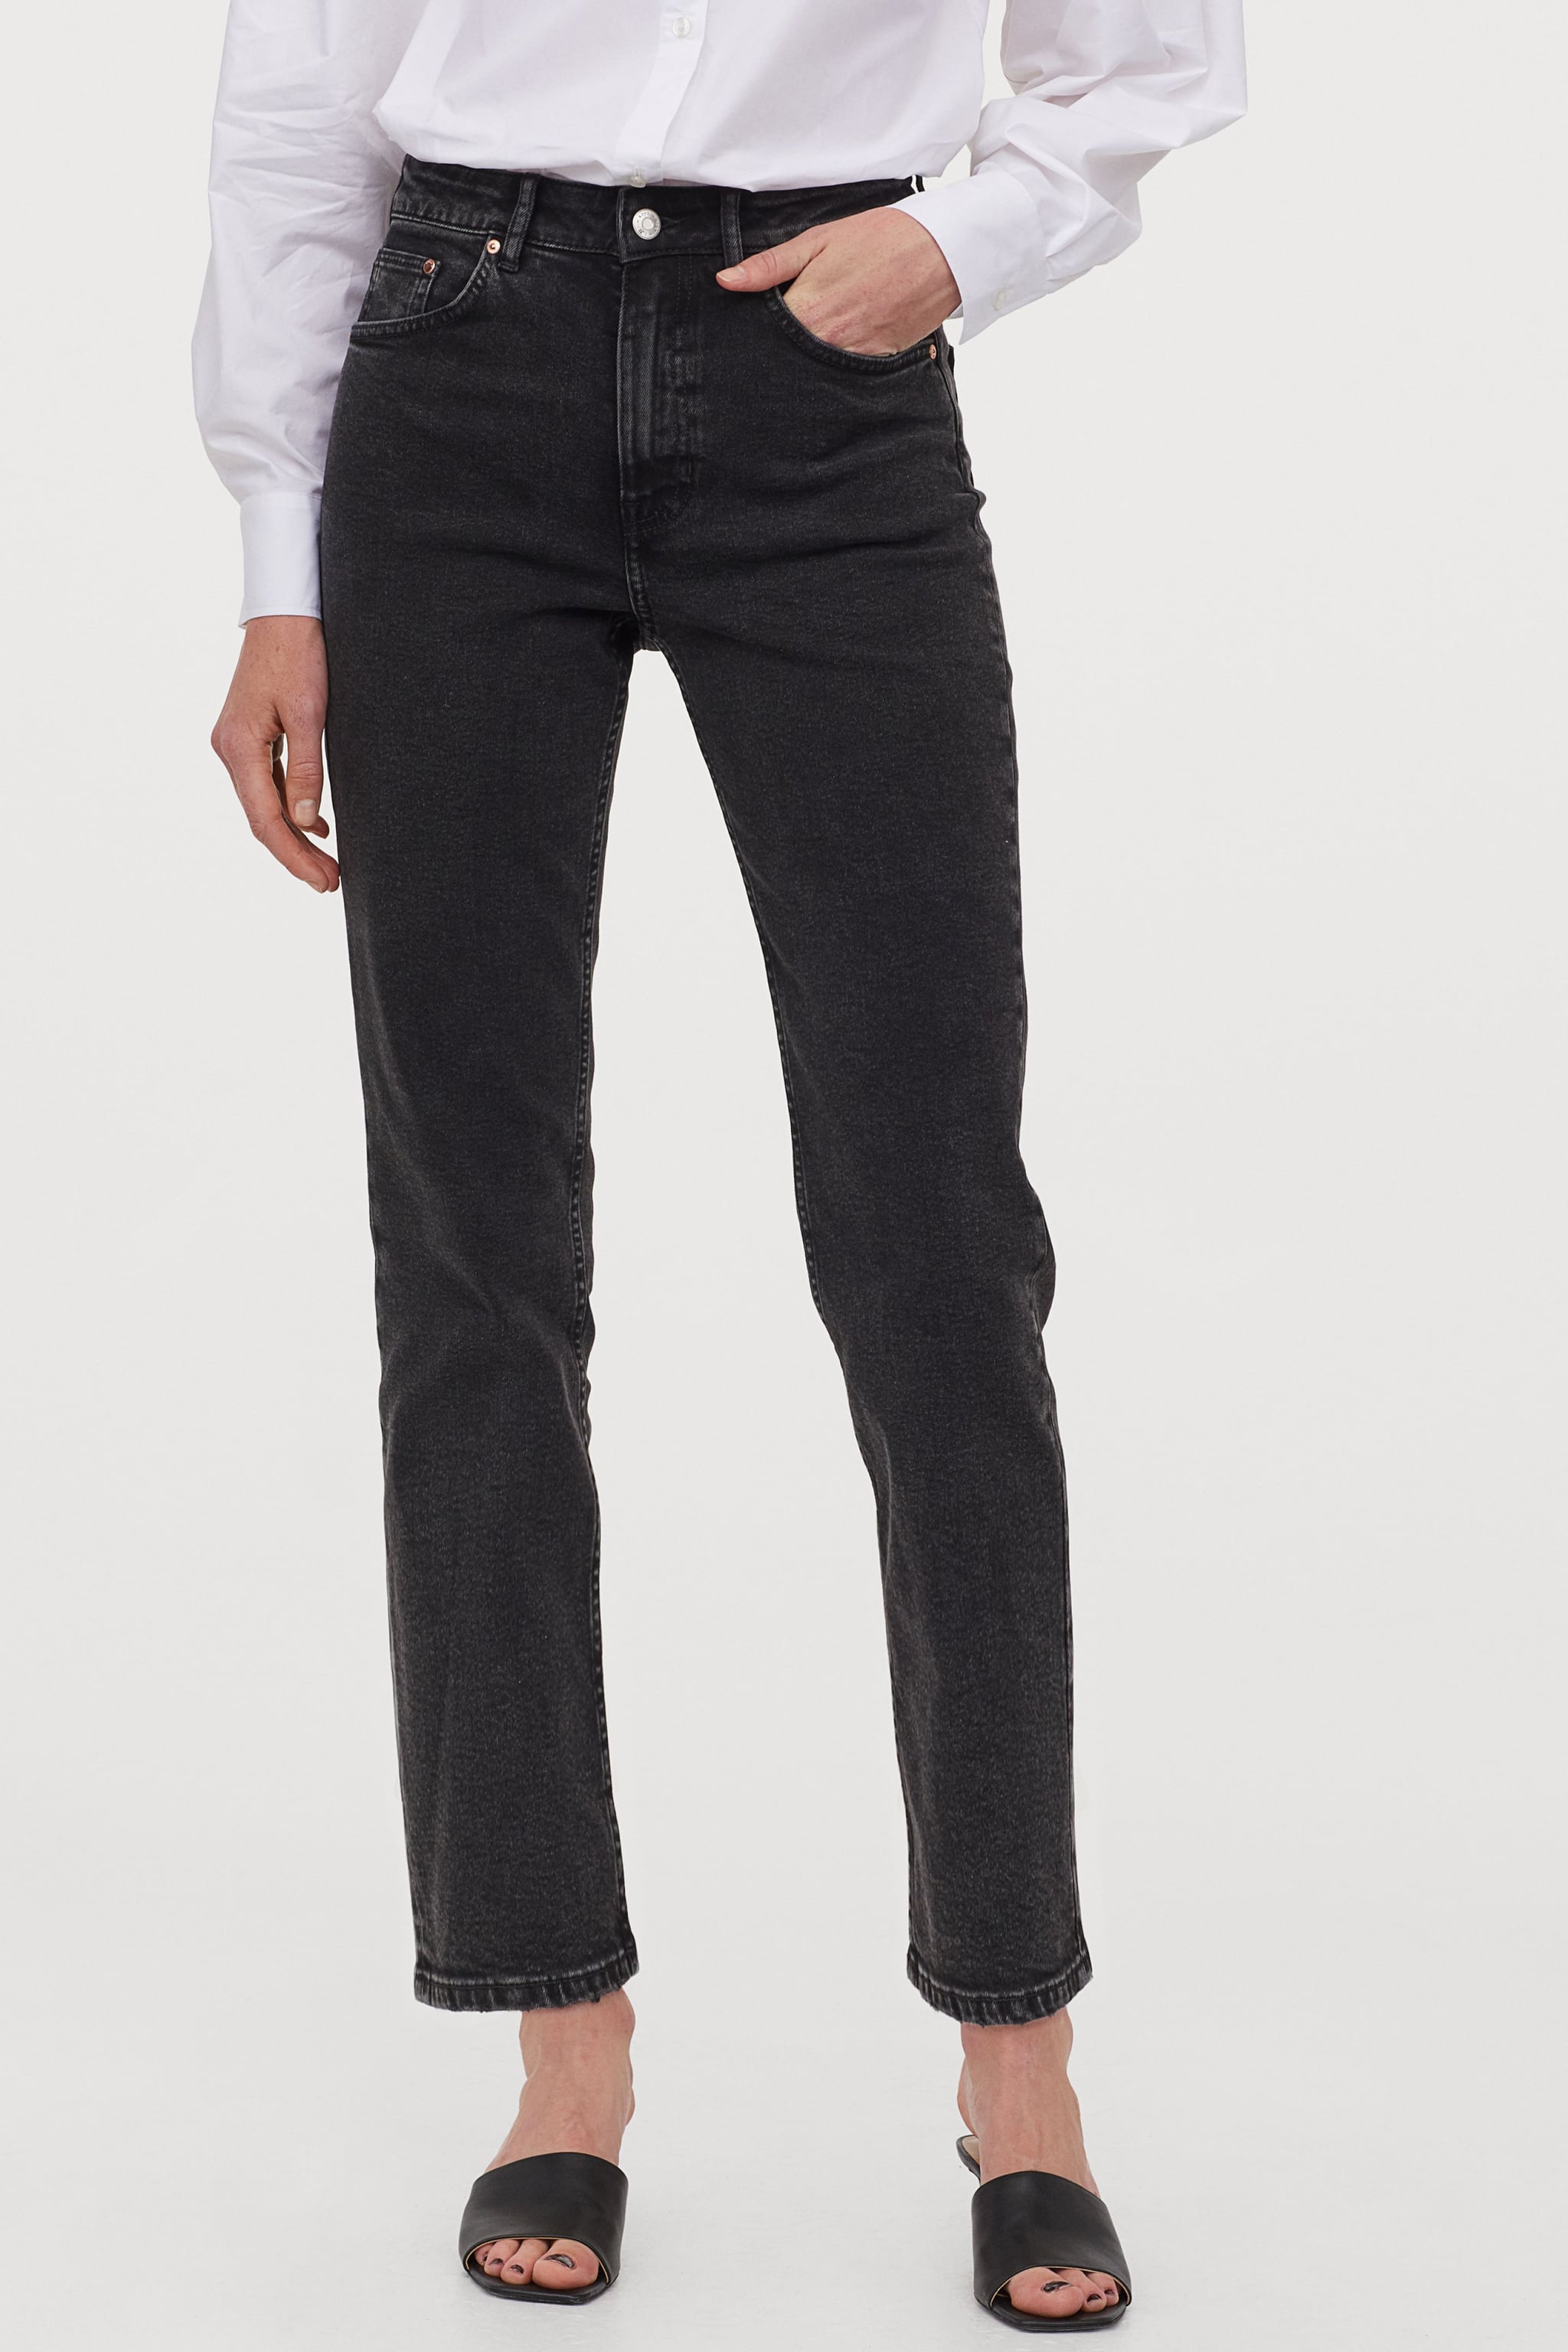 h&m vintage fit high waist jeans